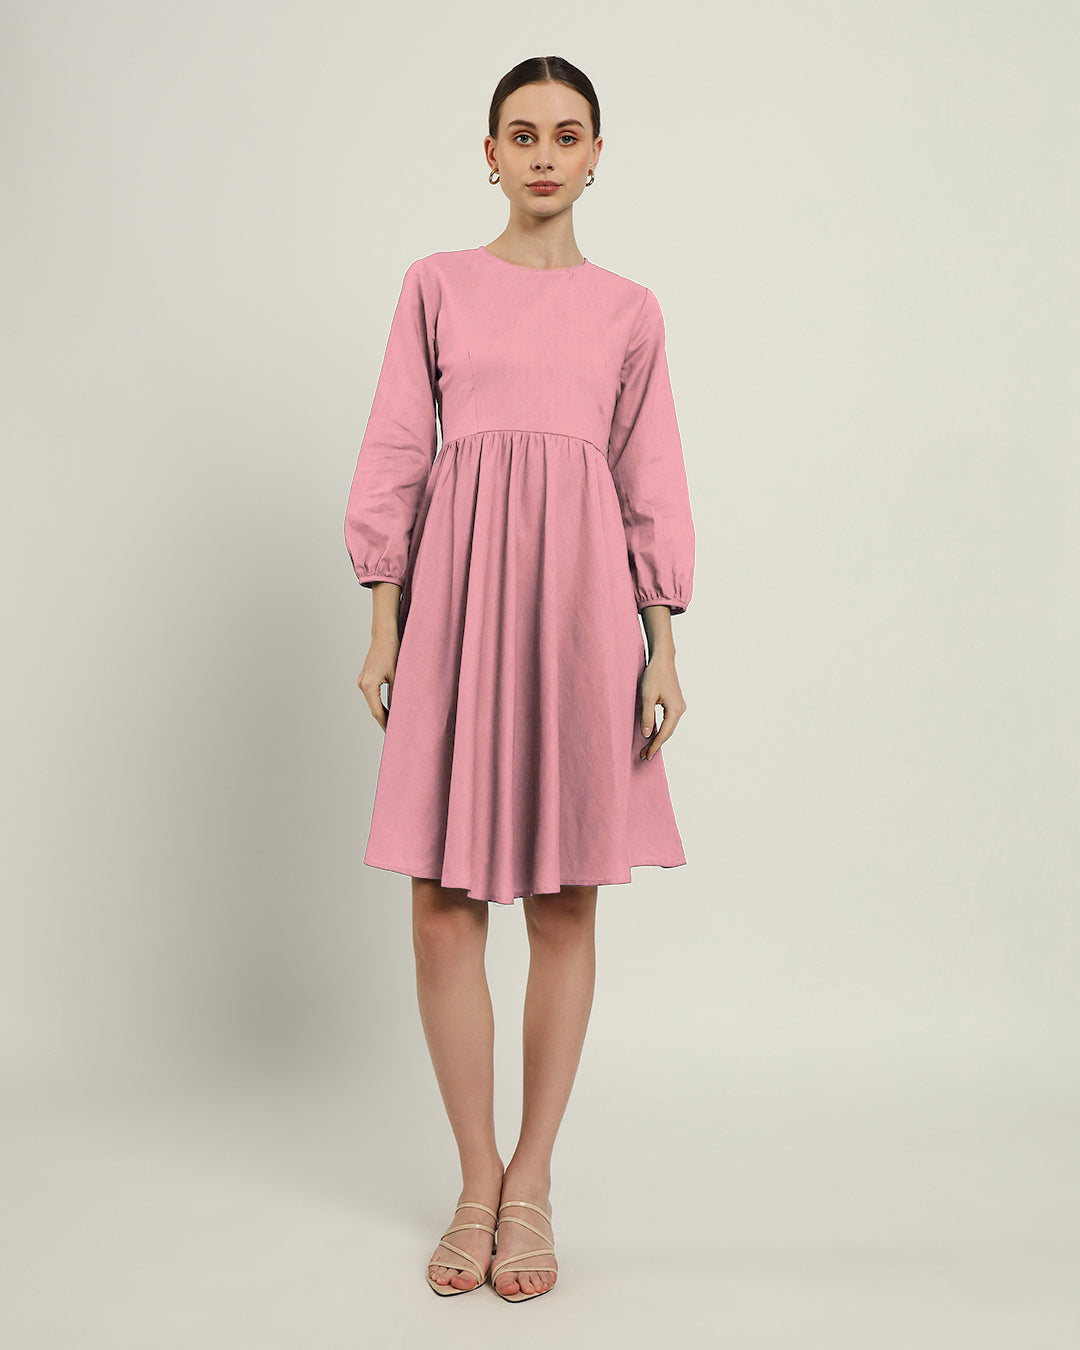 The Exeter Fondant Pink Dress